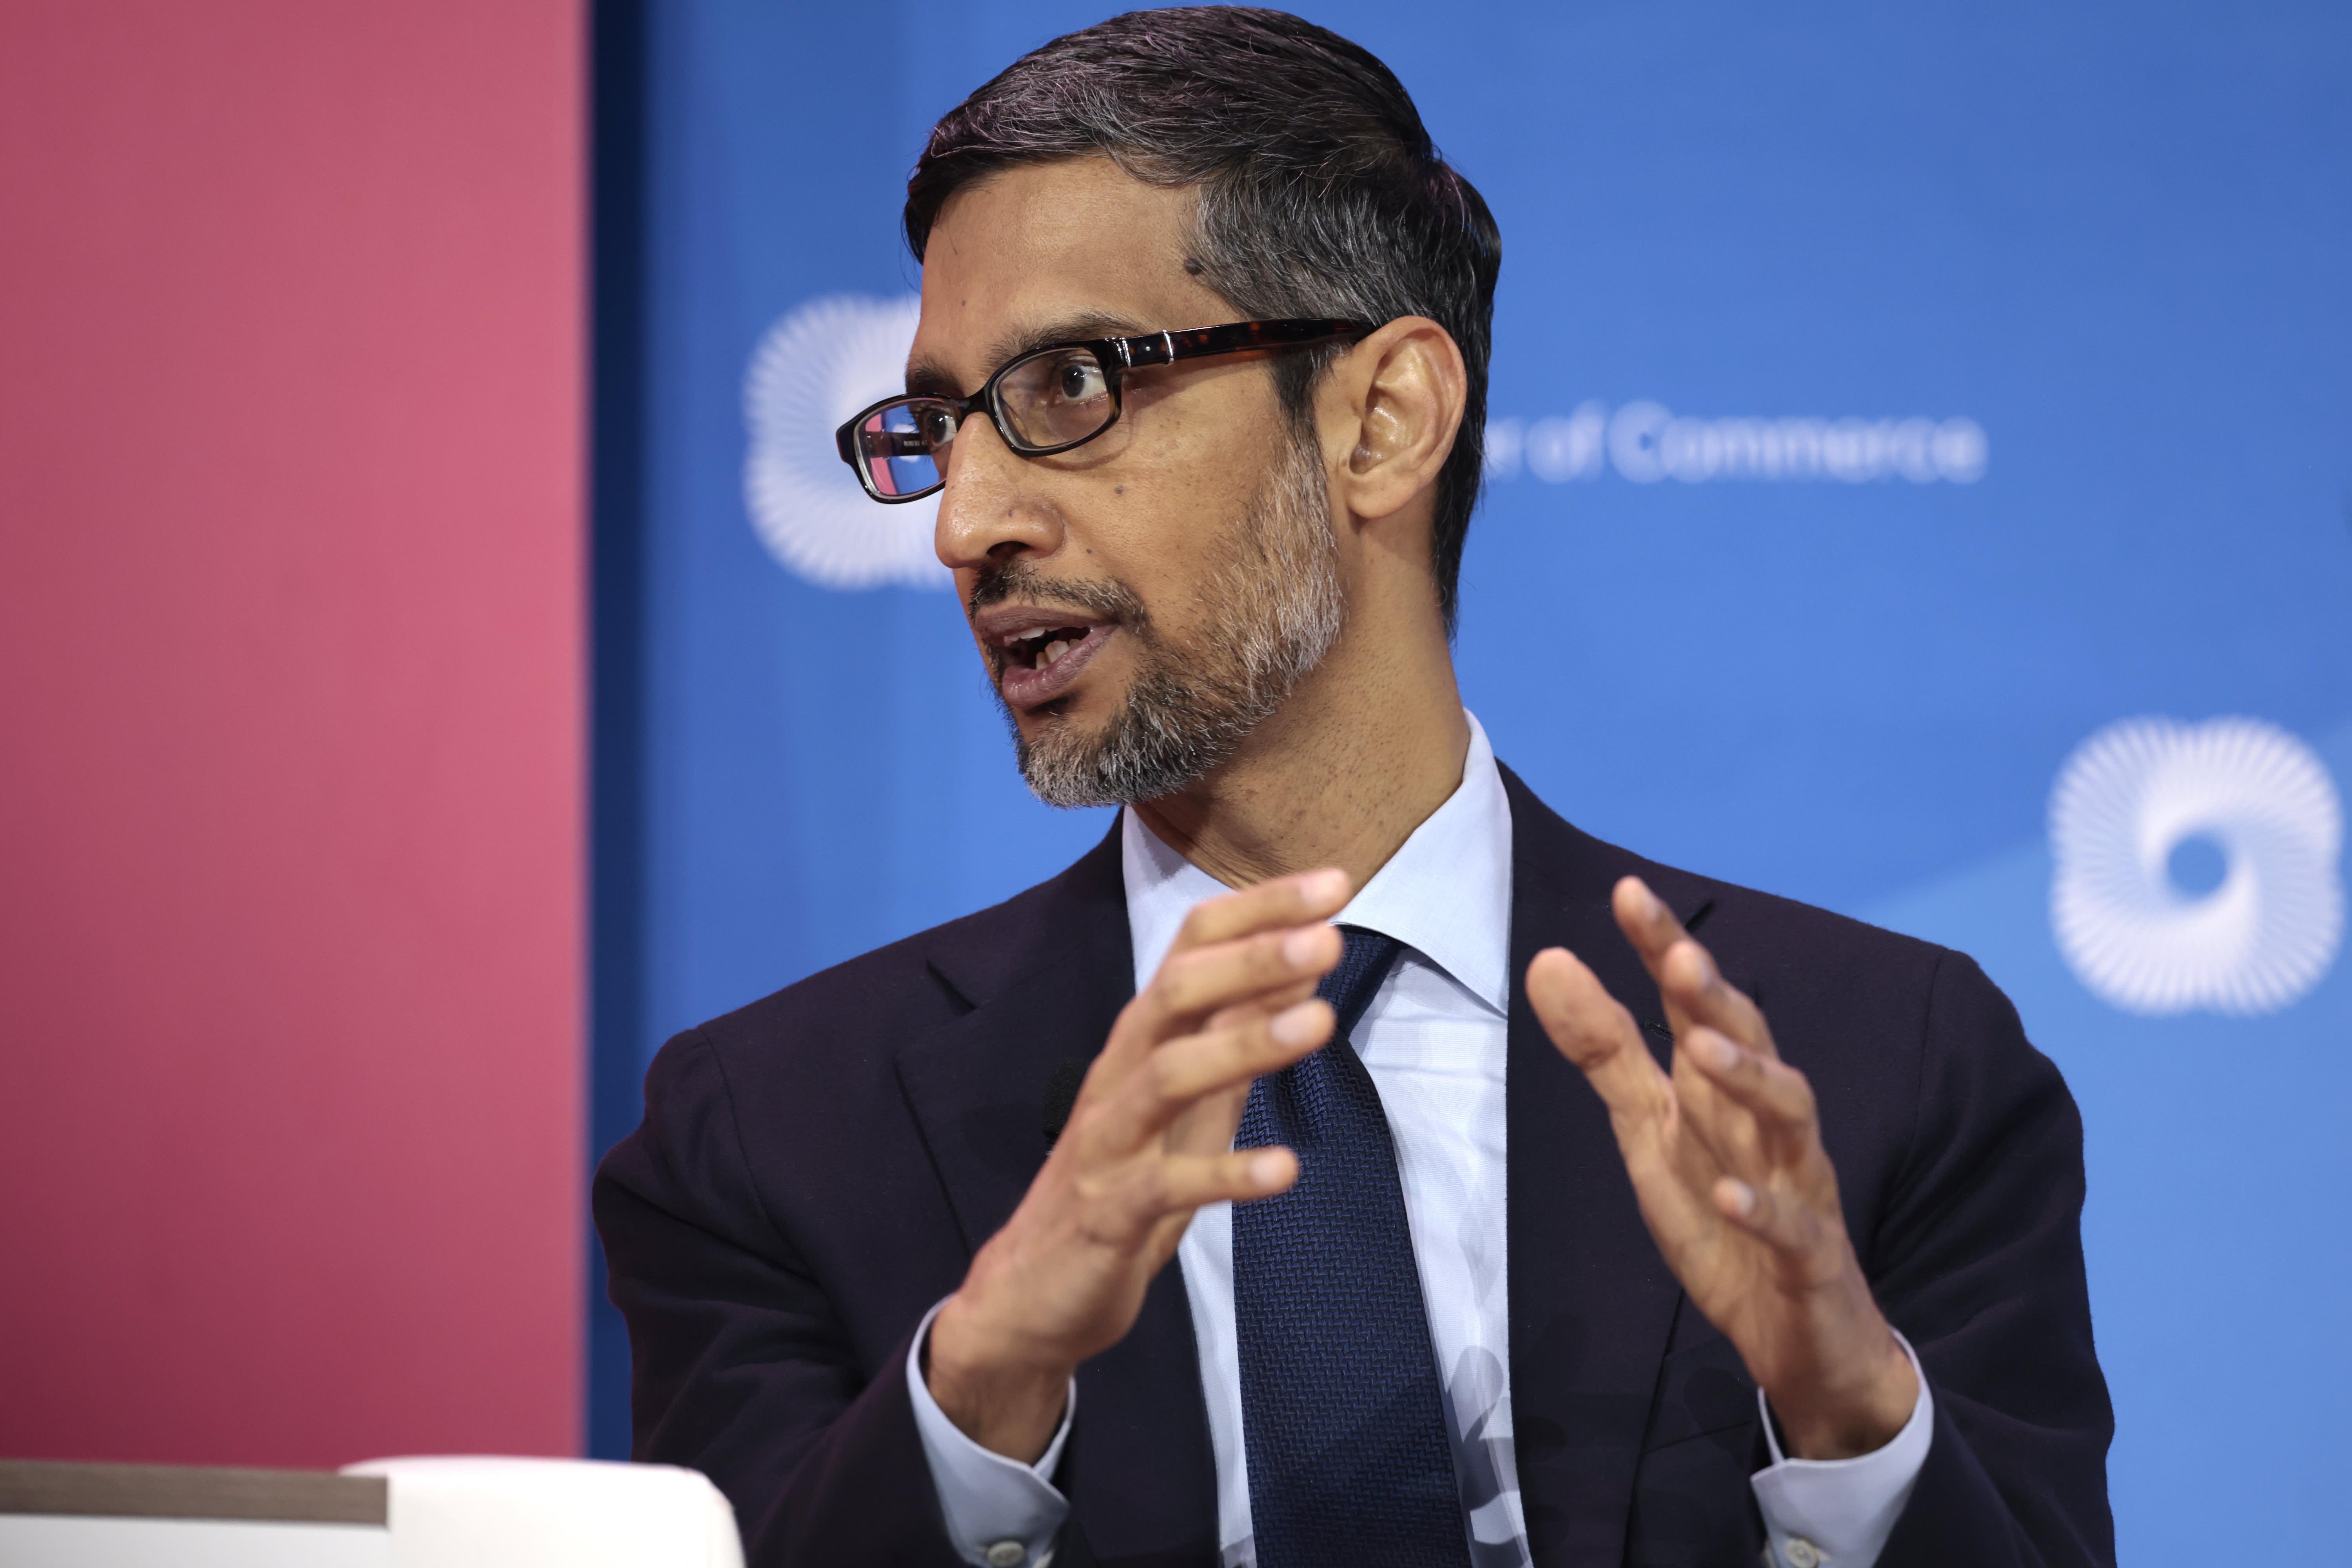 Google CEO Sundar Pichai has warned society to brace for the impact of AI acceleration